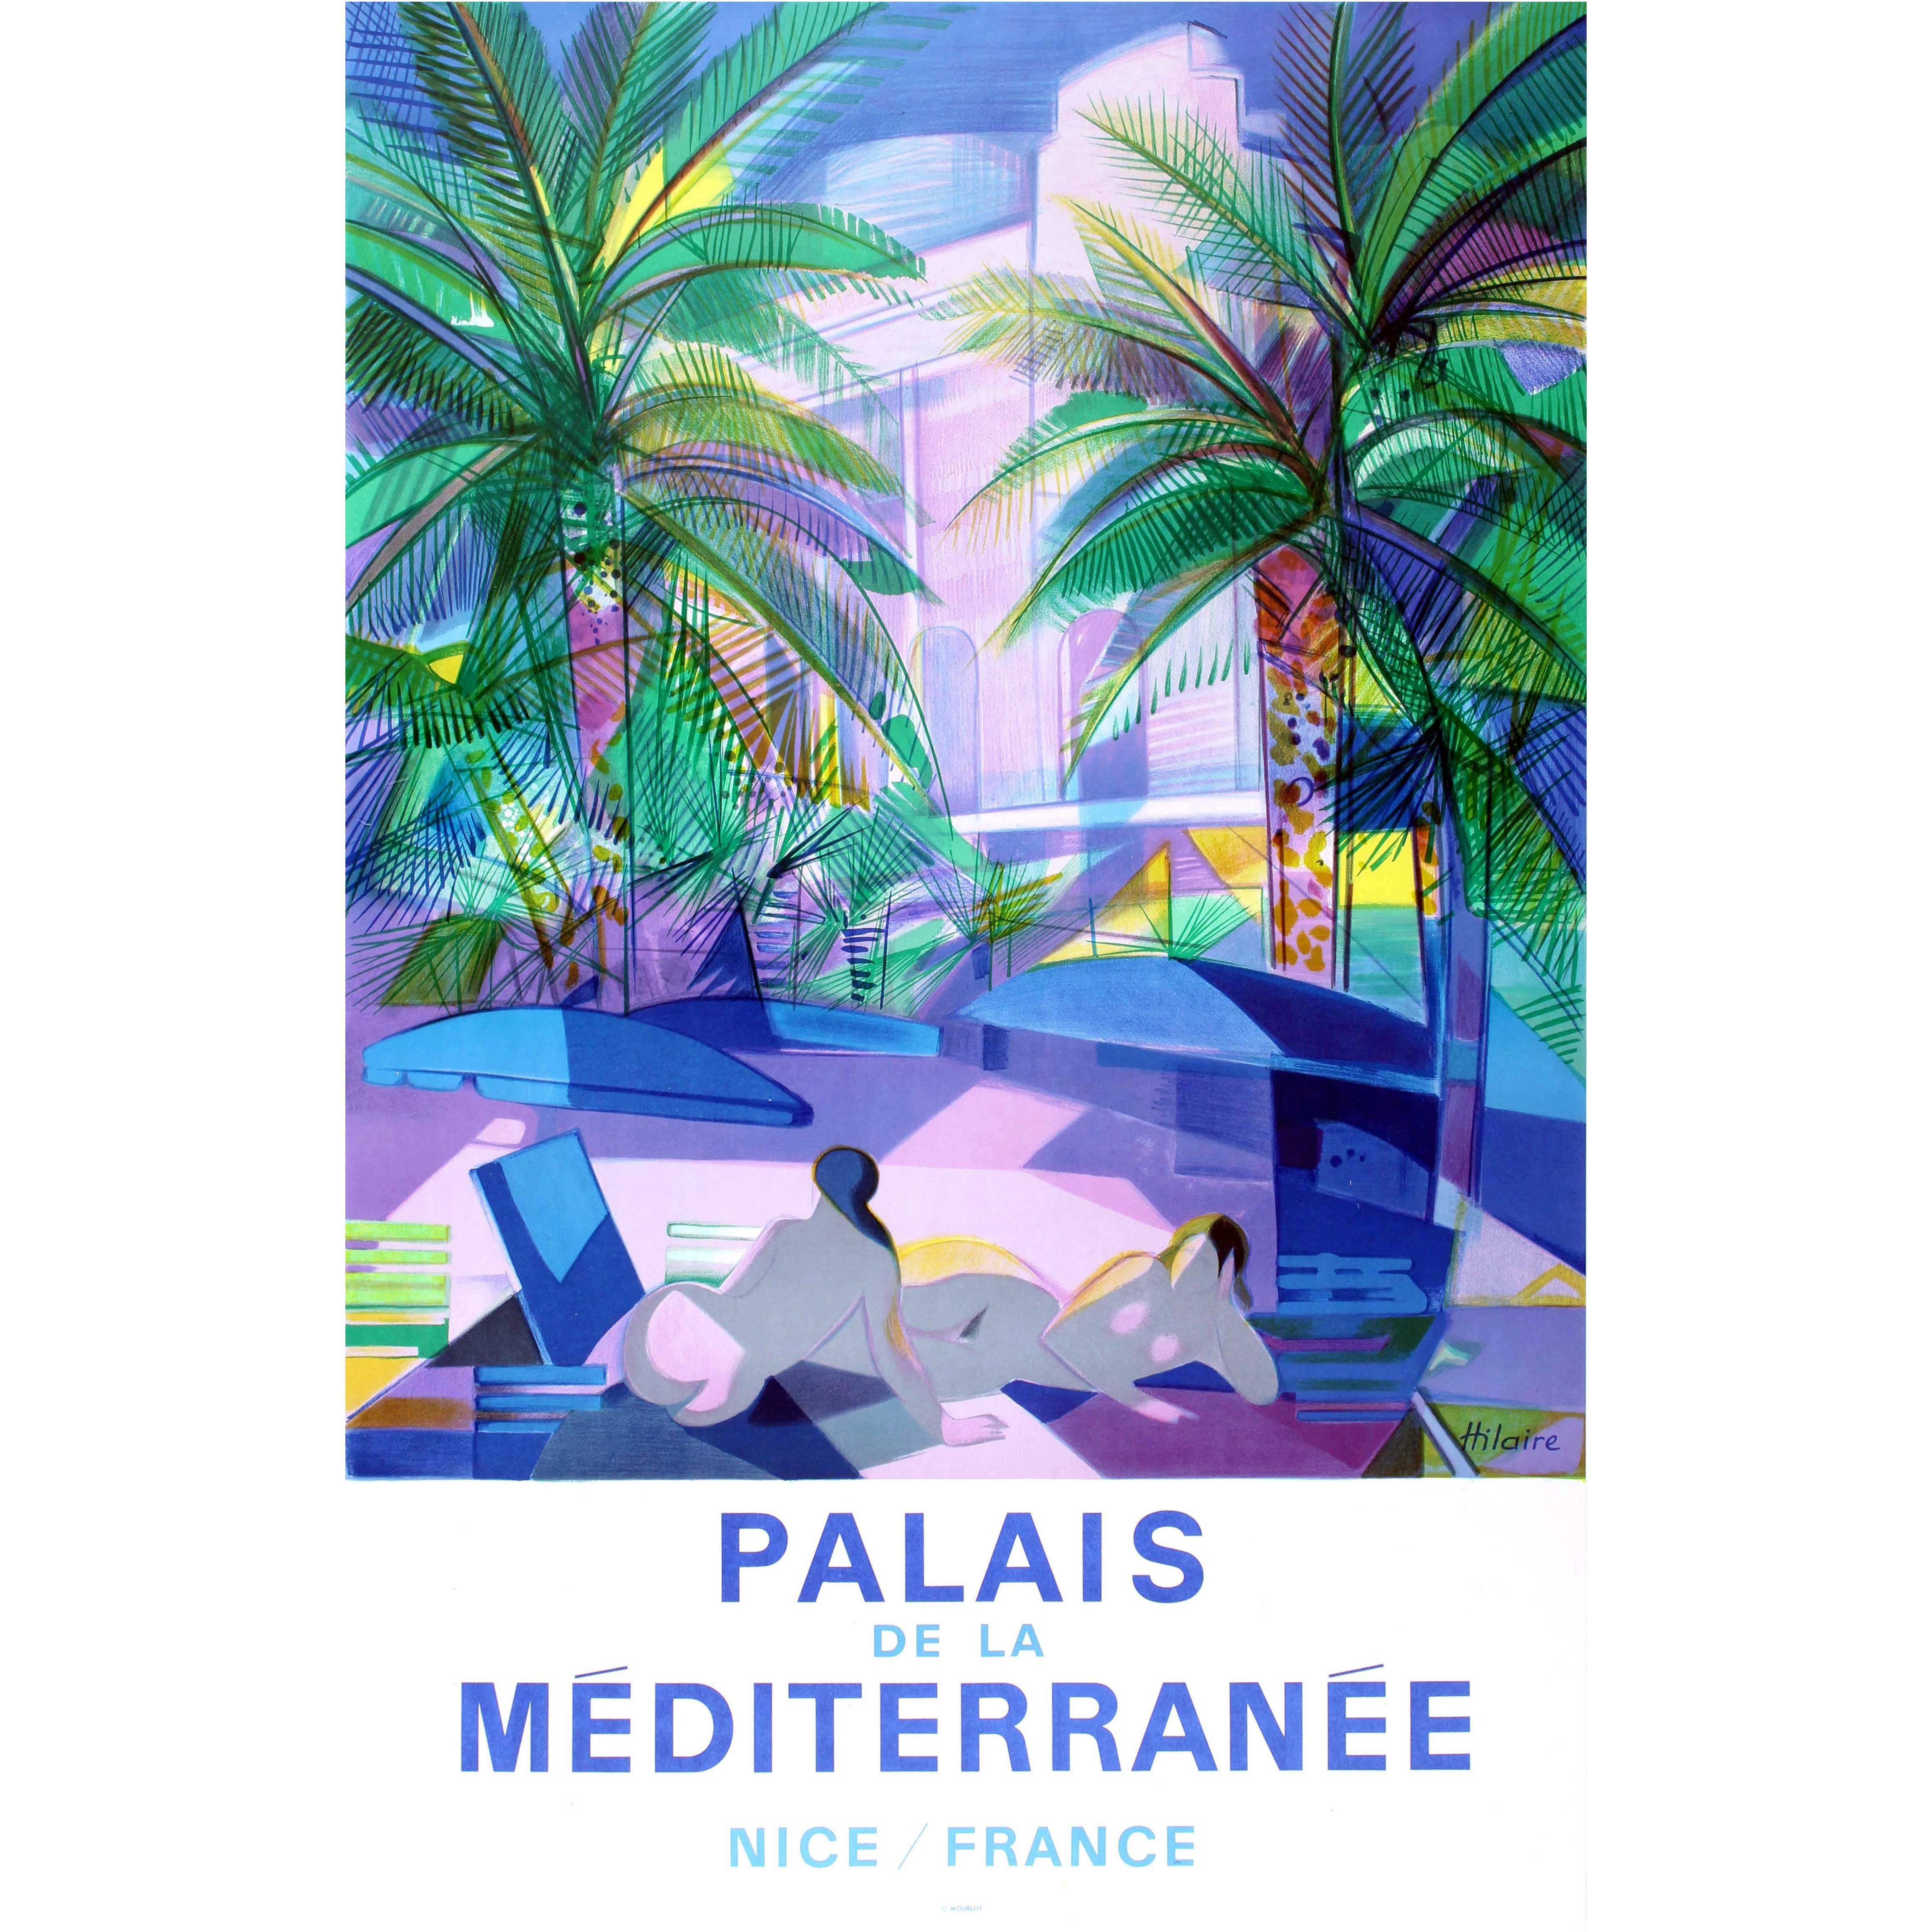 Original Vintage Advertising Poster For Palais de la Mediterranee Nice / France